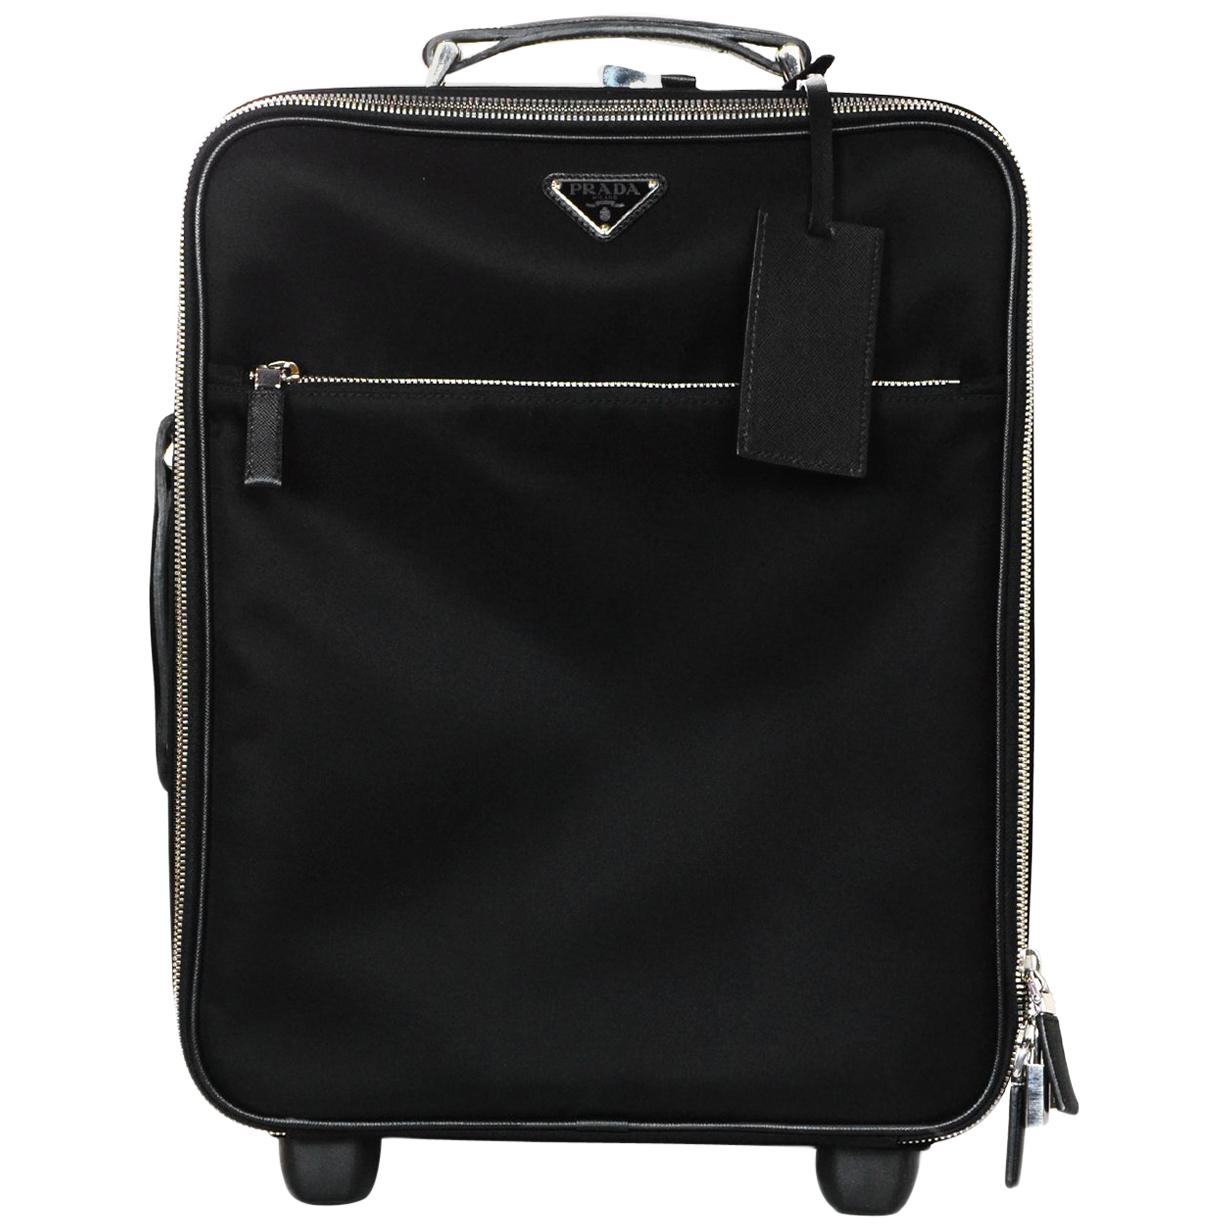 Prada Black Nylon/Saffiano Leather 40cm Carry-On Bag Rolling Luggage Suitcase